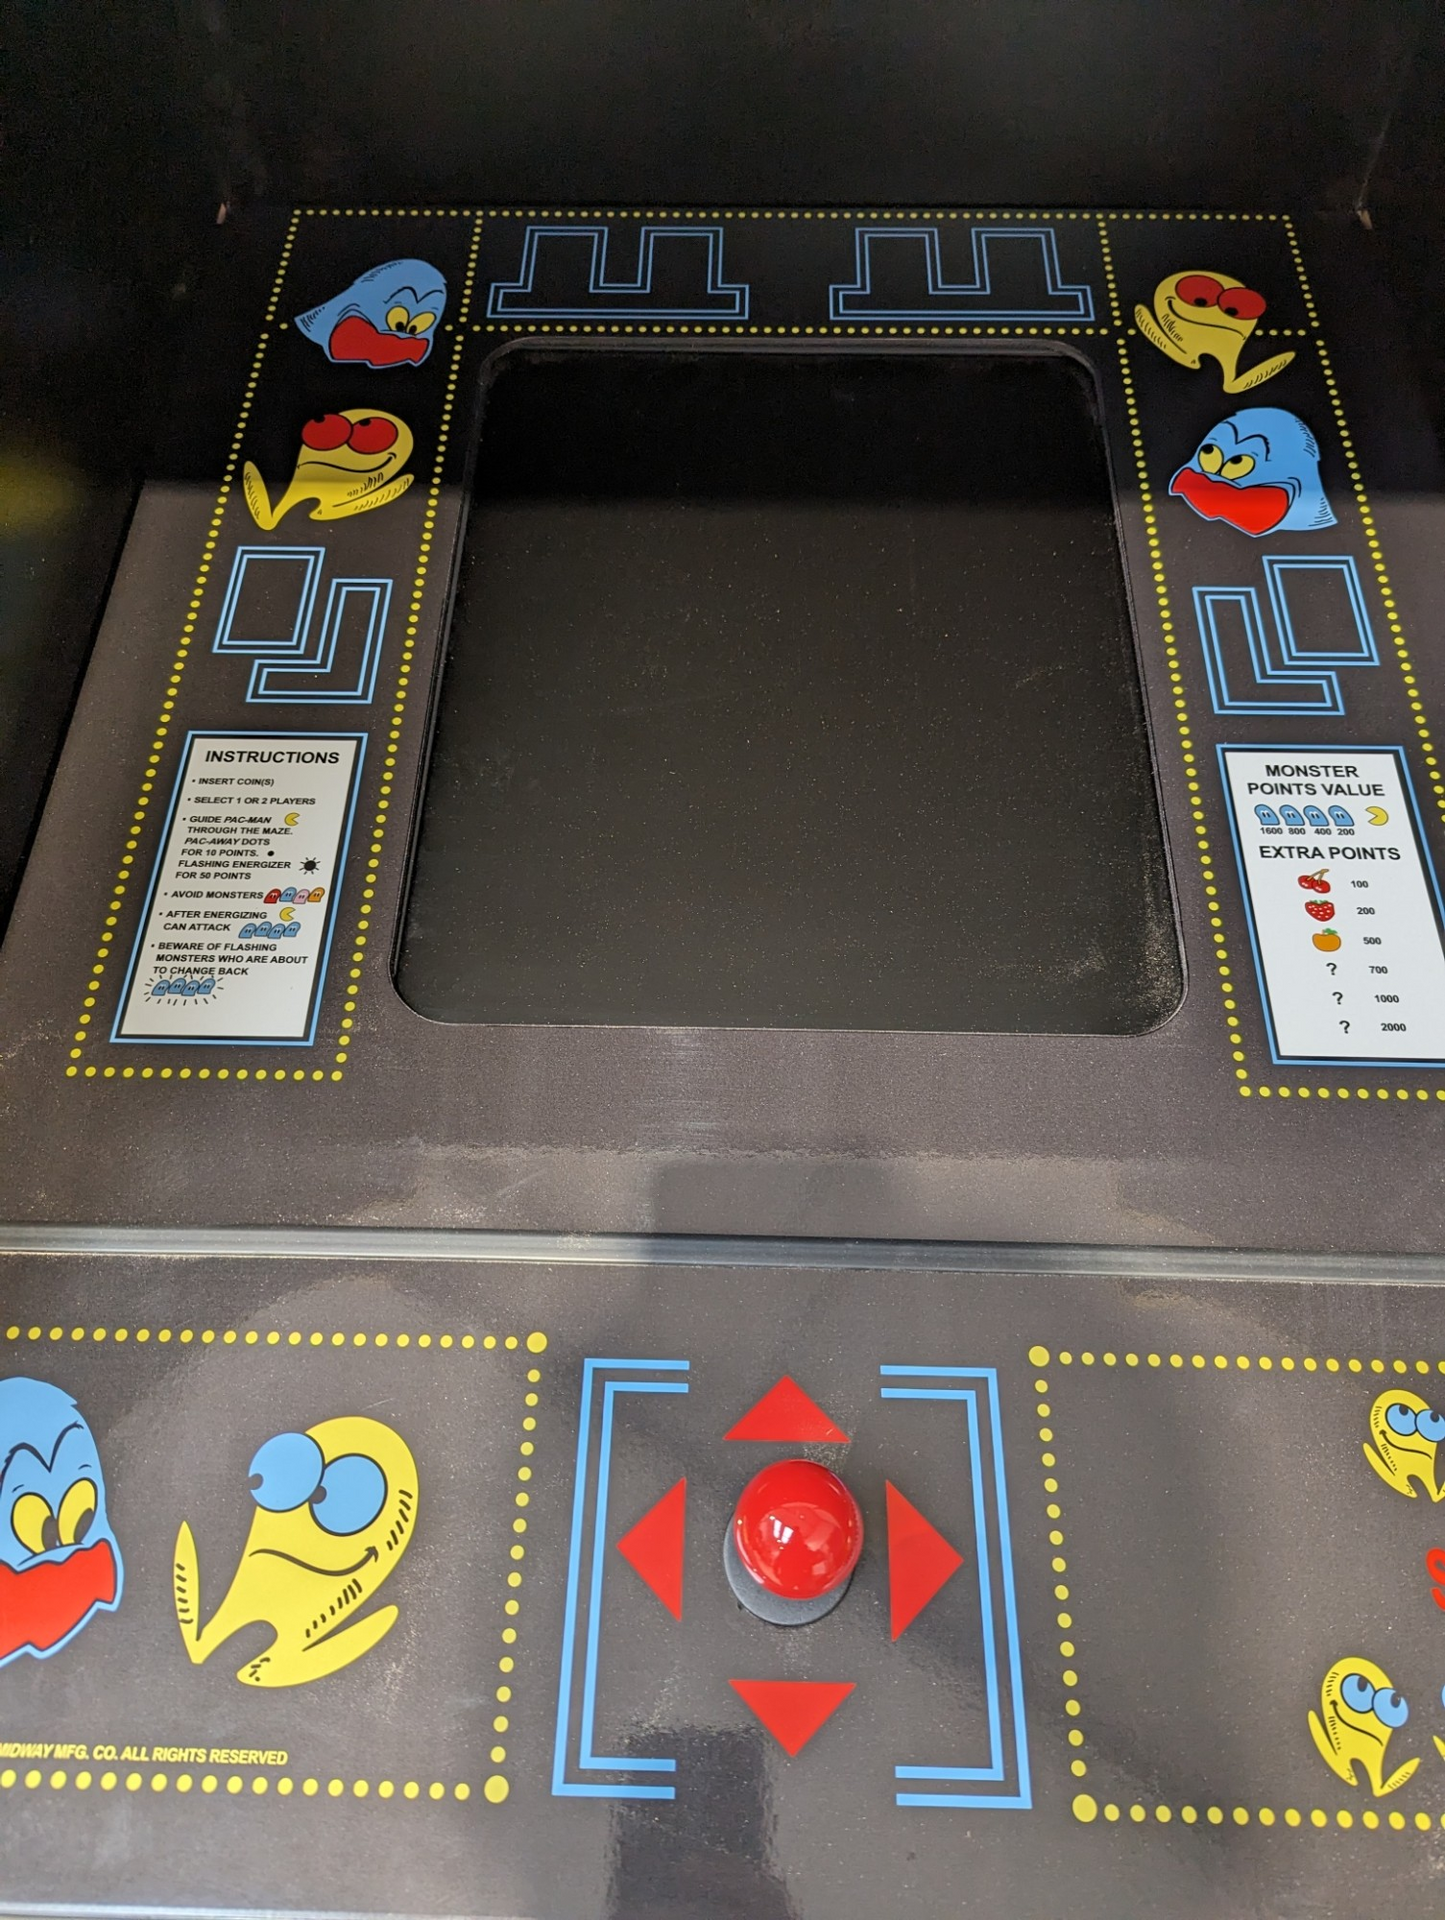 Pacman arcade machine - Accurate replica